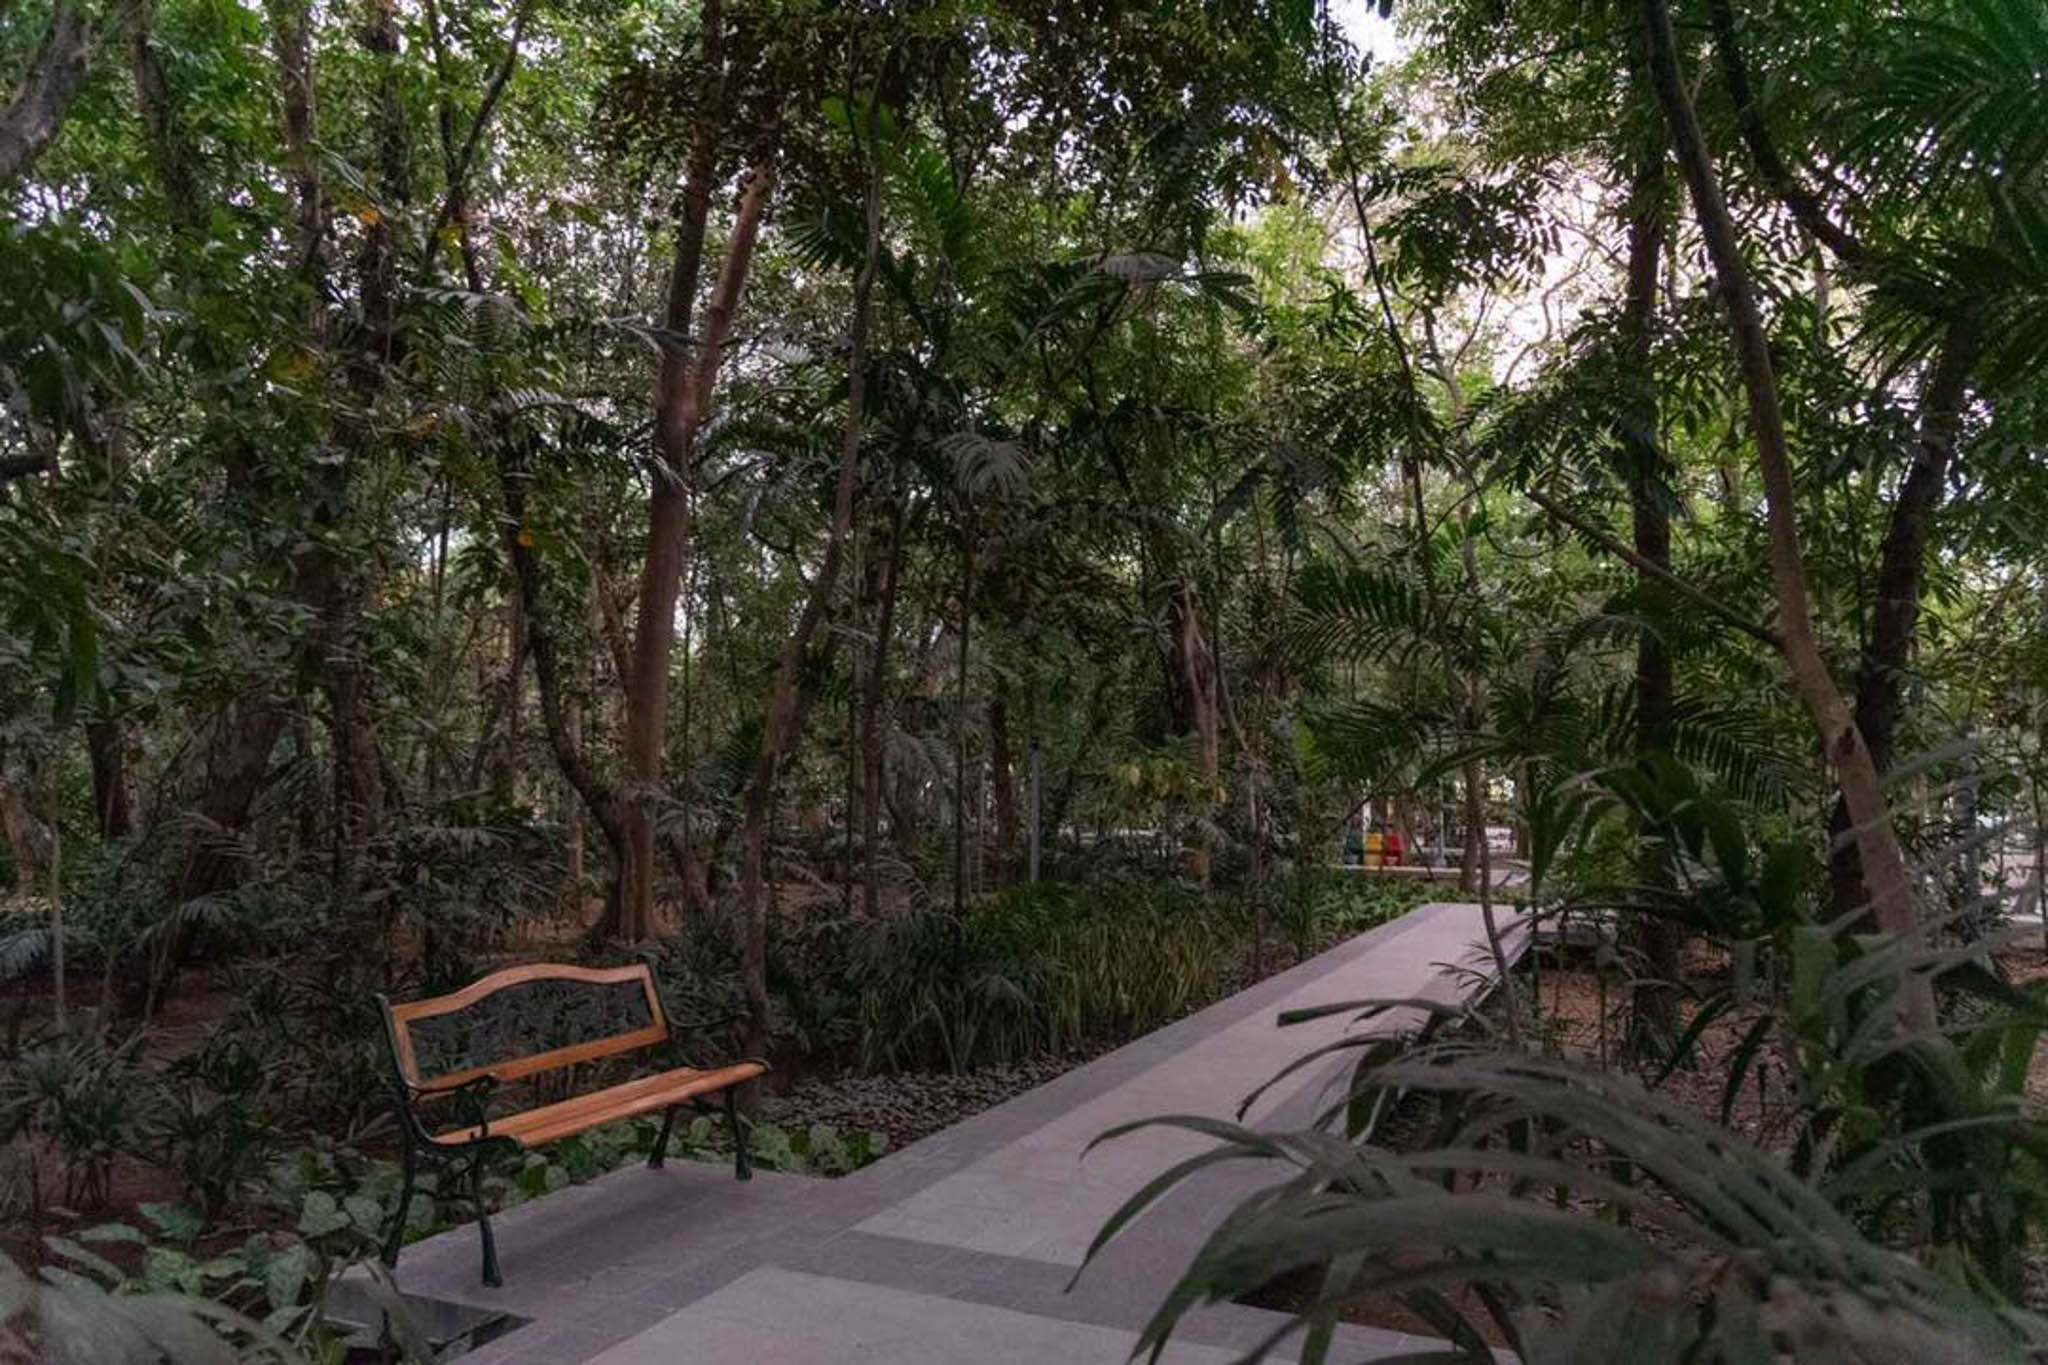 Arroceros forest Park photo courtesy of Manila Public Information Office.